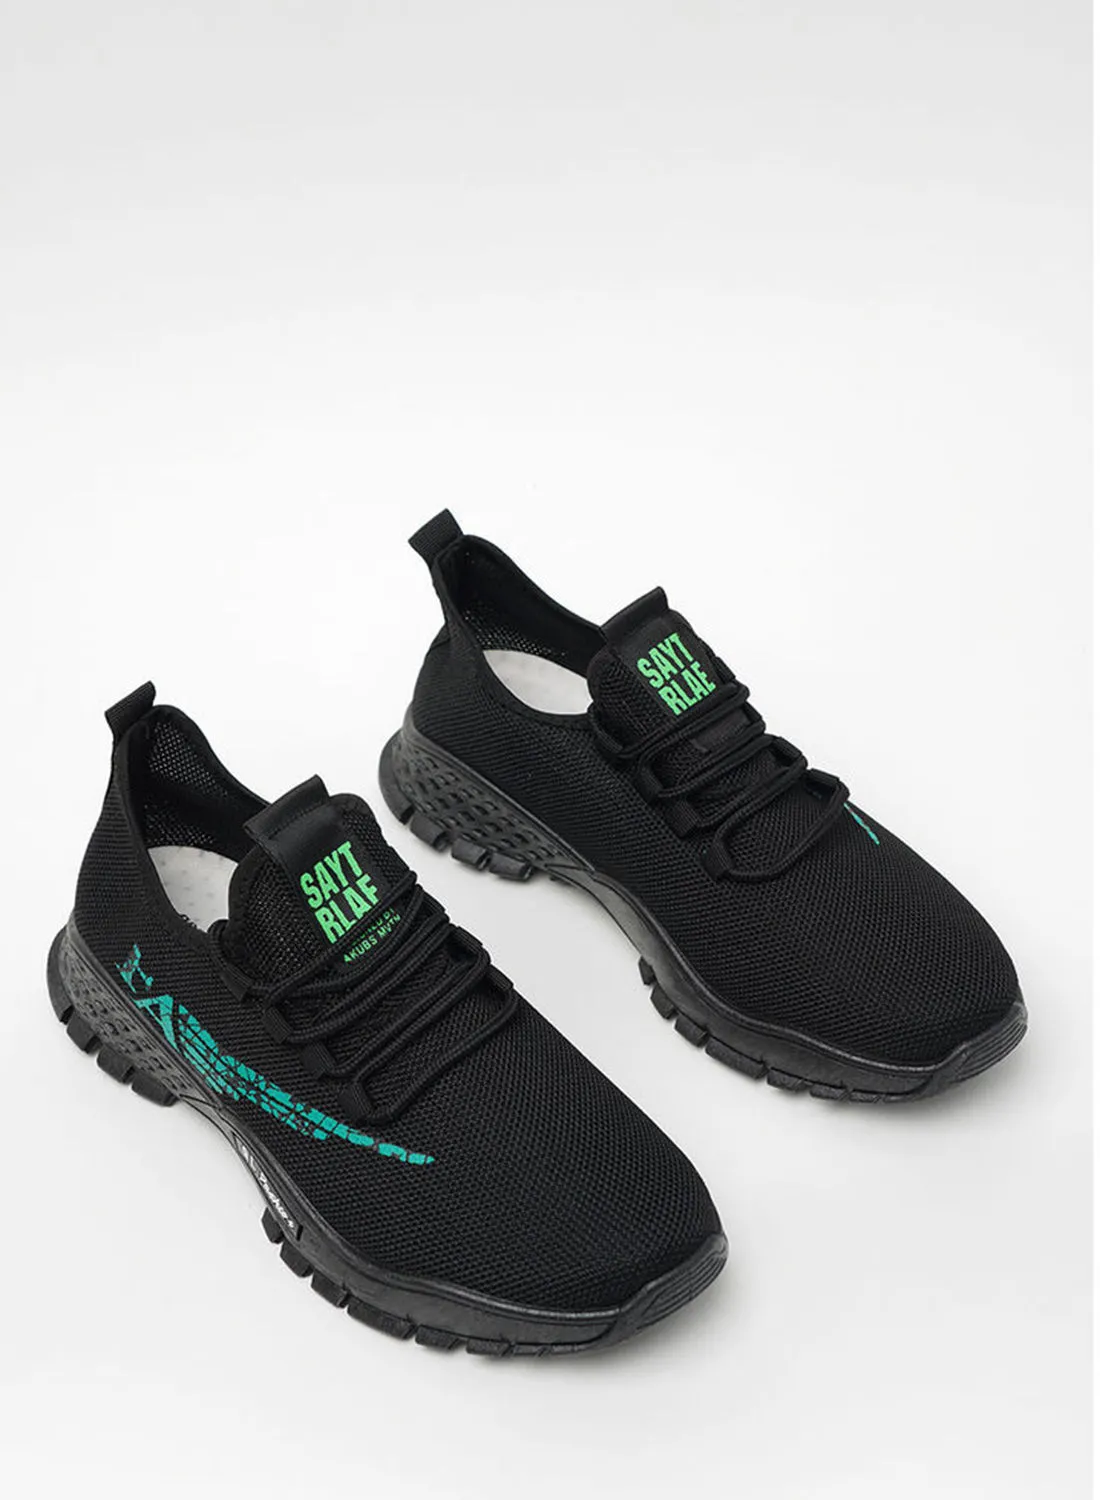 Cobblerz Men's Lace-Up Low Top Sneakers Black/Green